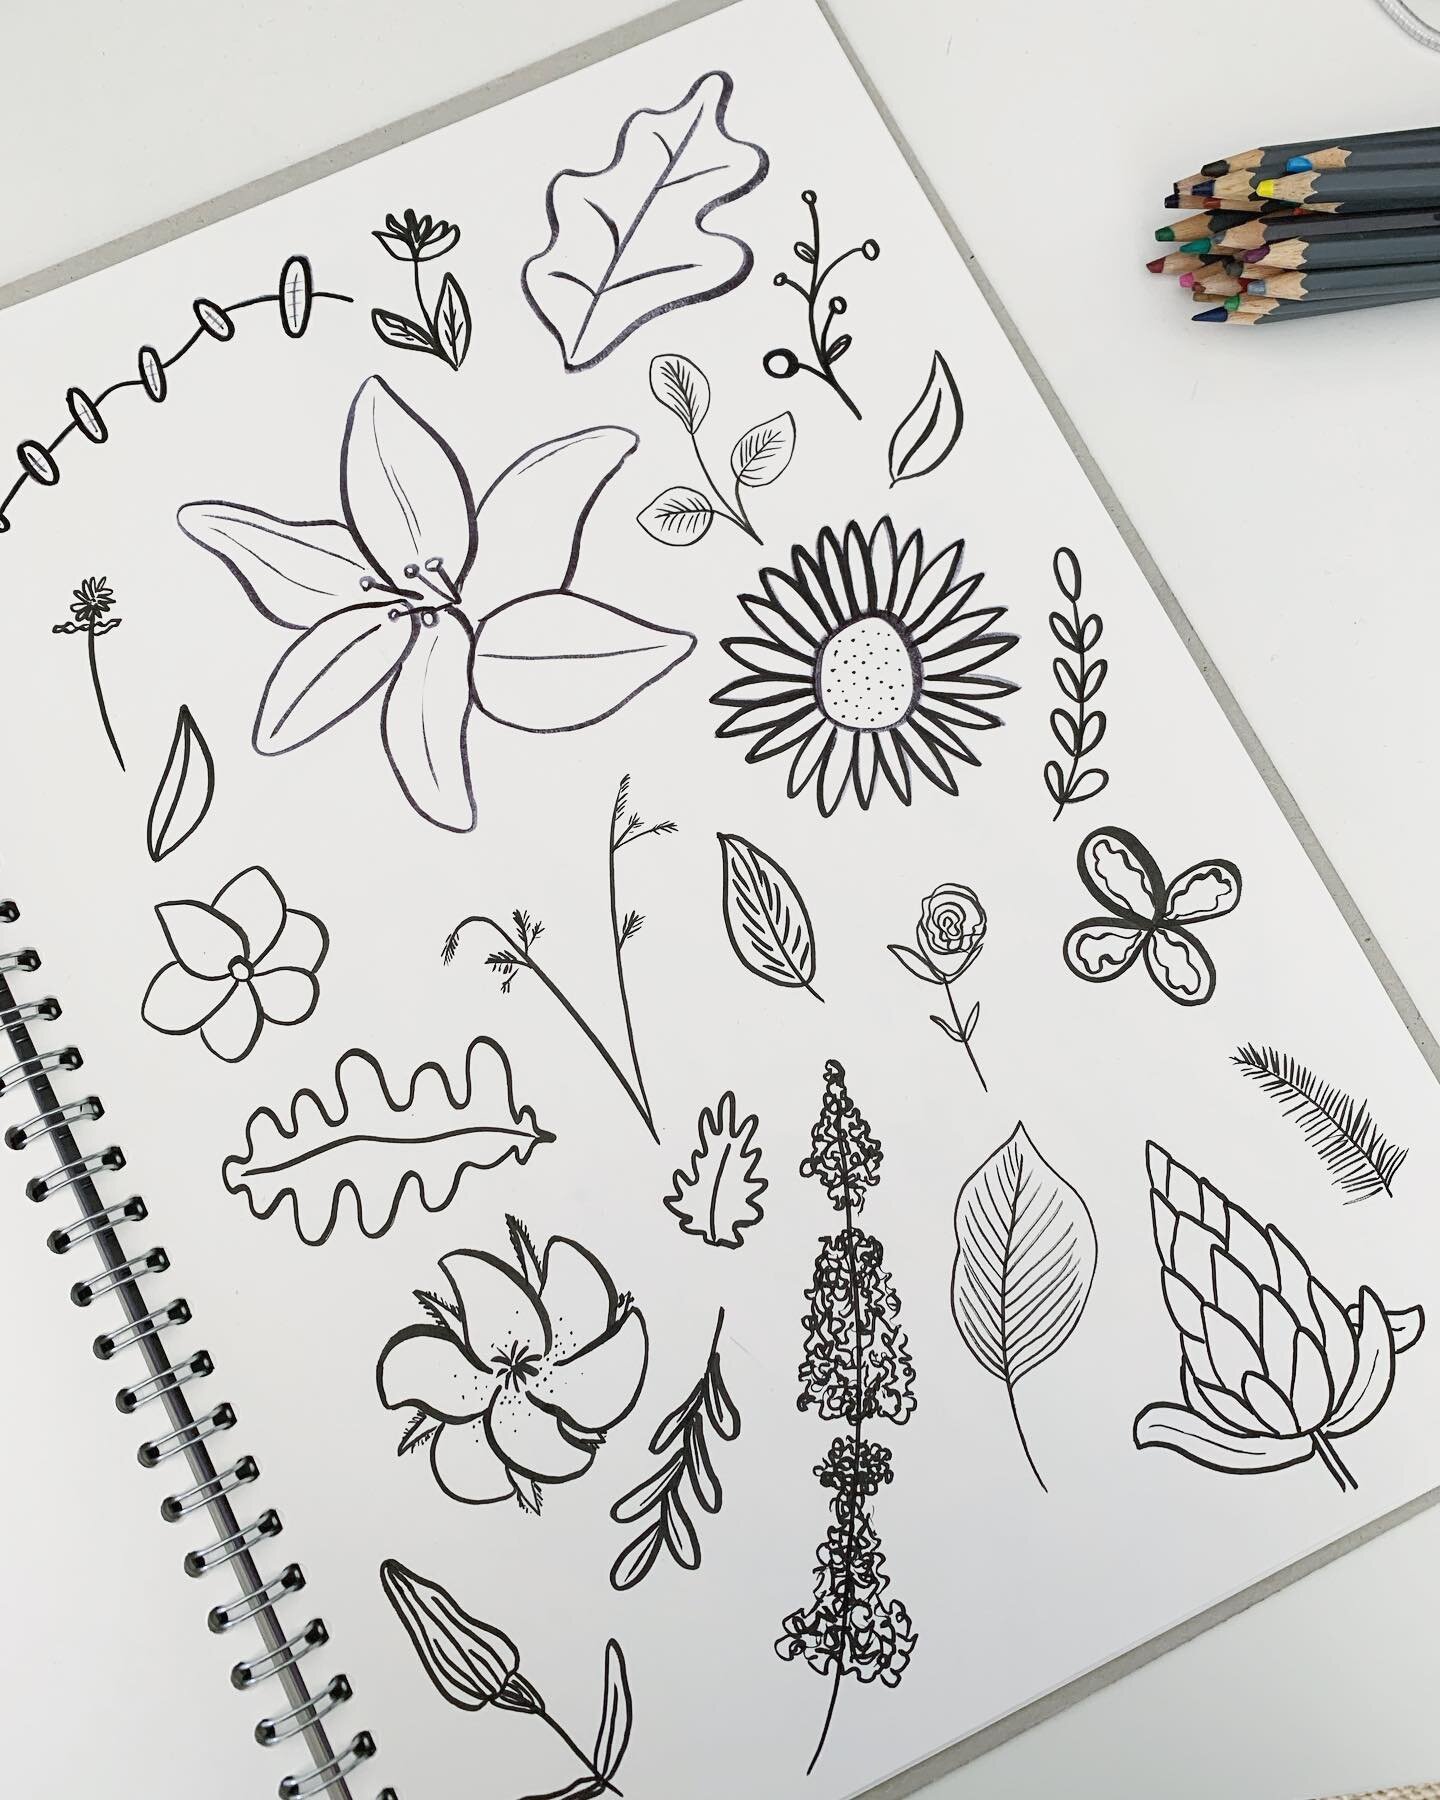 Some plant studies
Materials: pen

#sketch #pen #drawing #drawings #art #study #plant #flowers #nature #illustration #artwork #artistsoninstagram #draw #plants #sketchbook #sketching